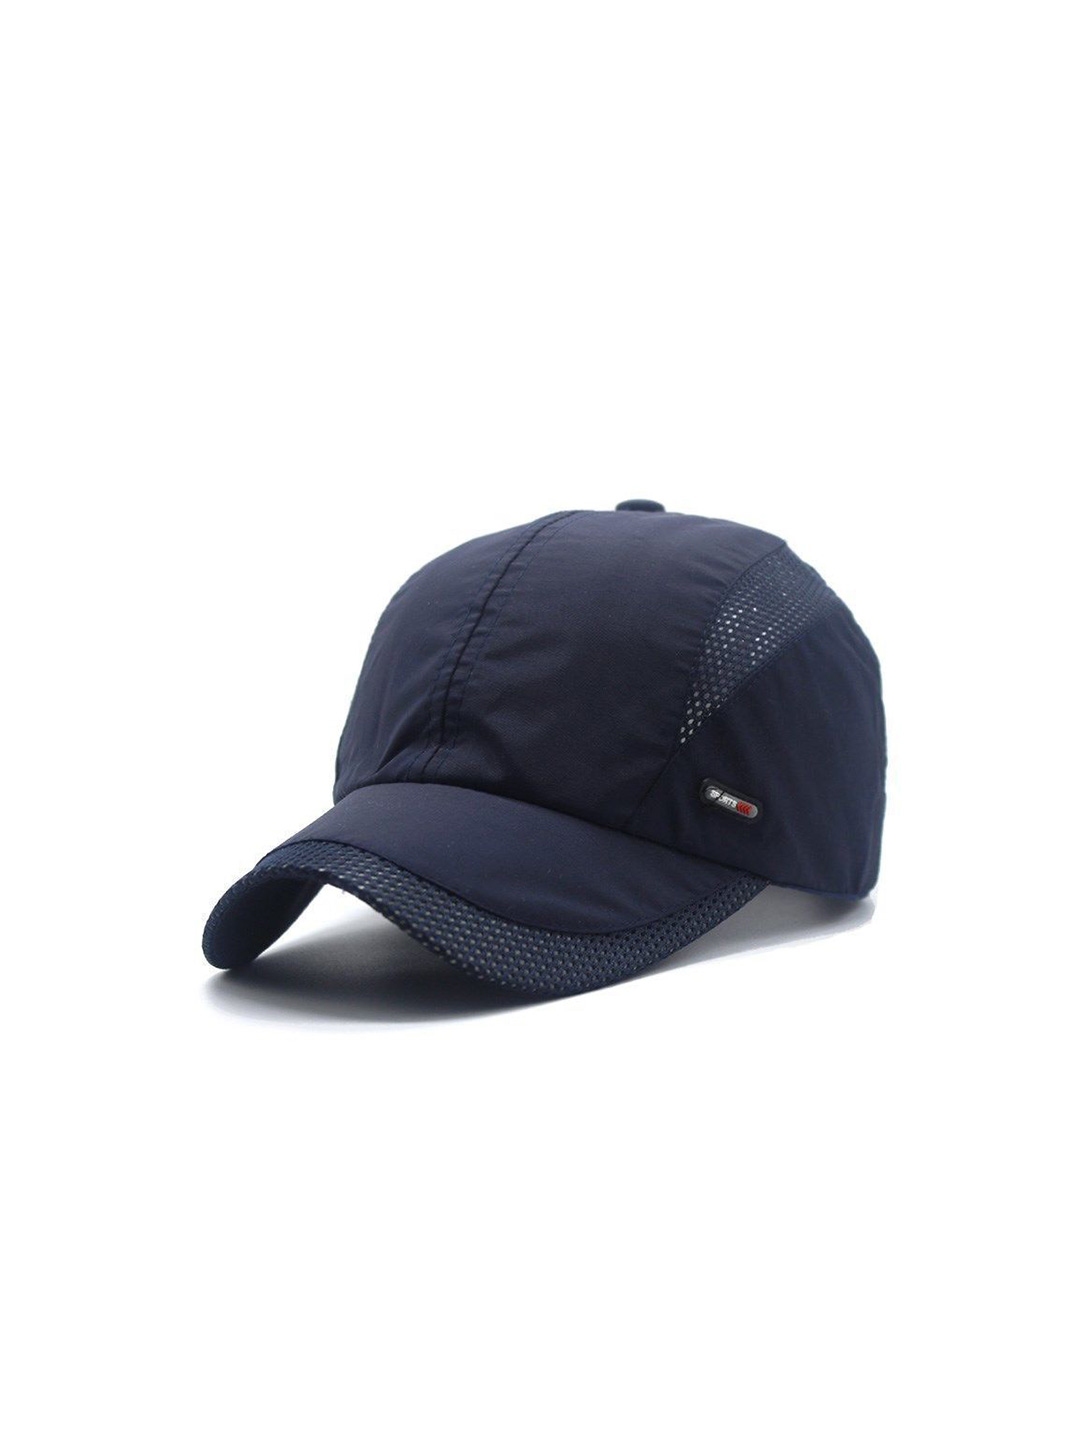 Buy Alexvyan Men Cotton Breathable Sports Baseball Cap - Caps for Men ...